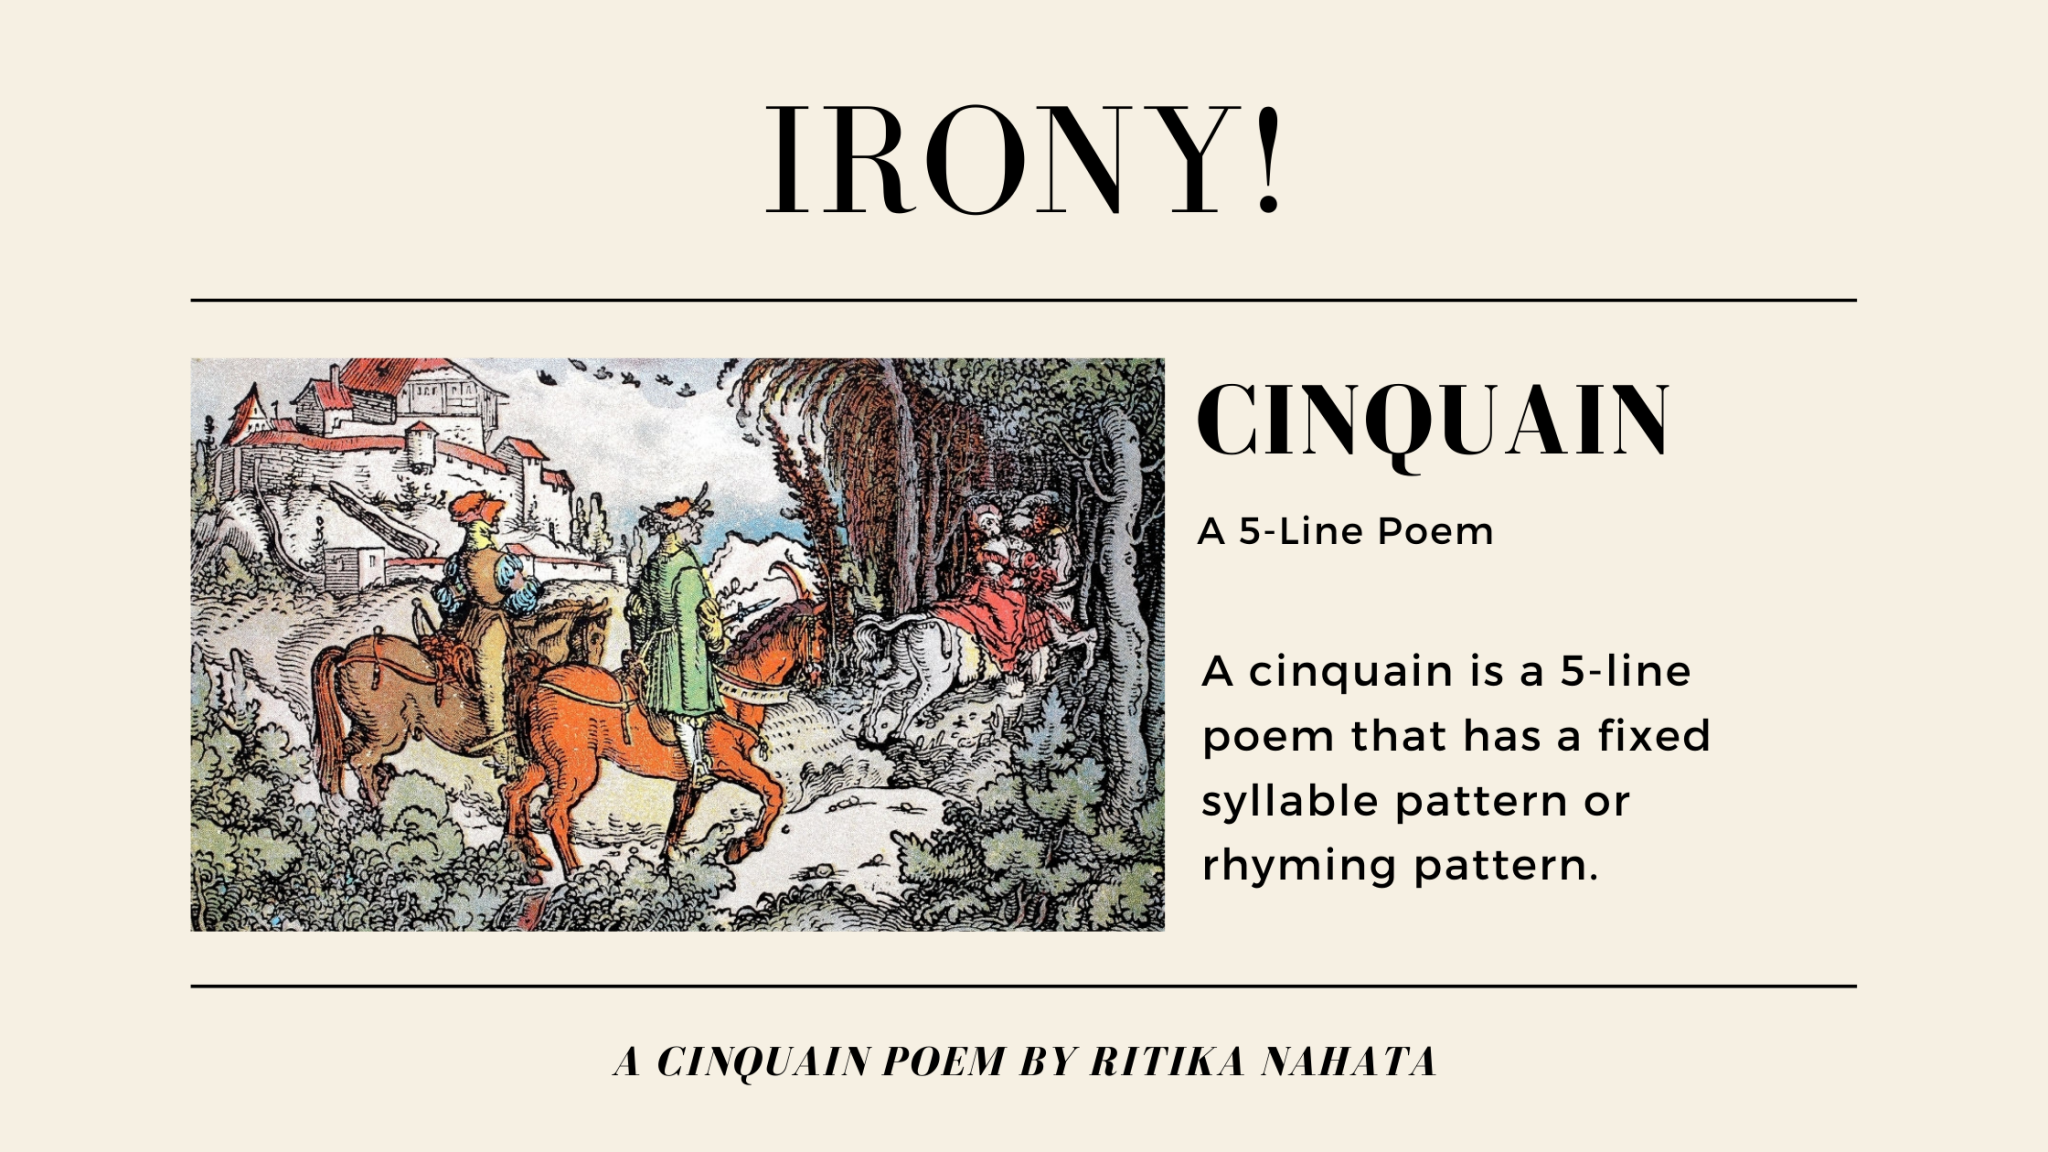 Irony | A Cinquain Poem by Ritika Nahata at UpDivine